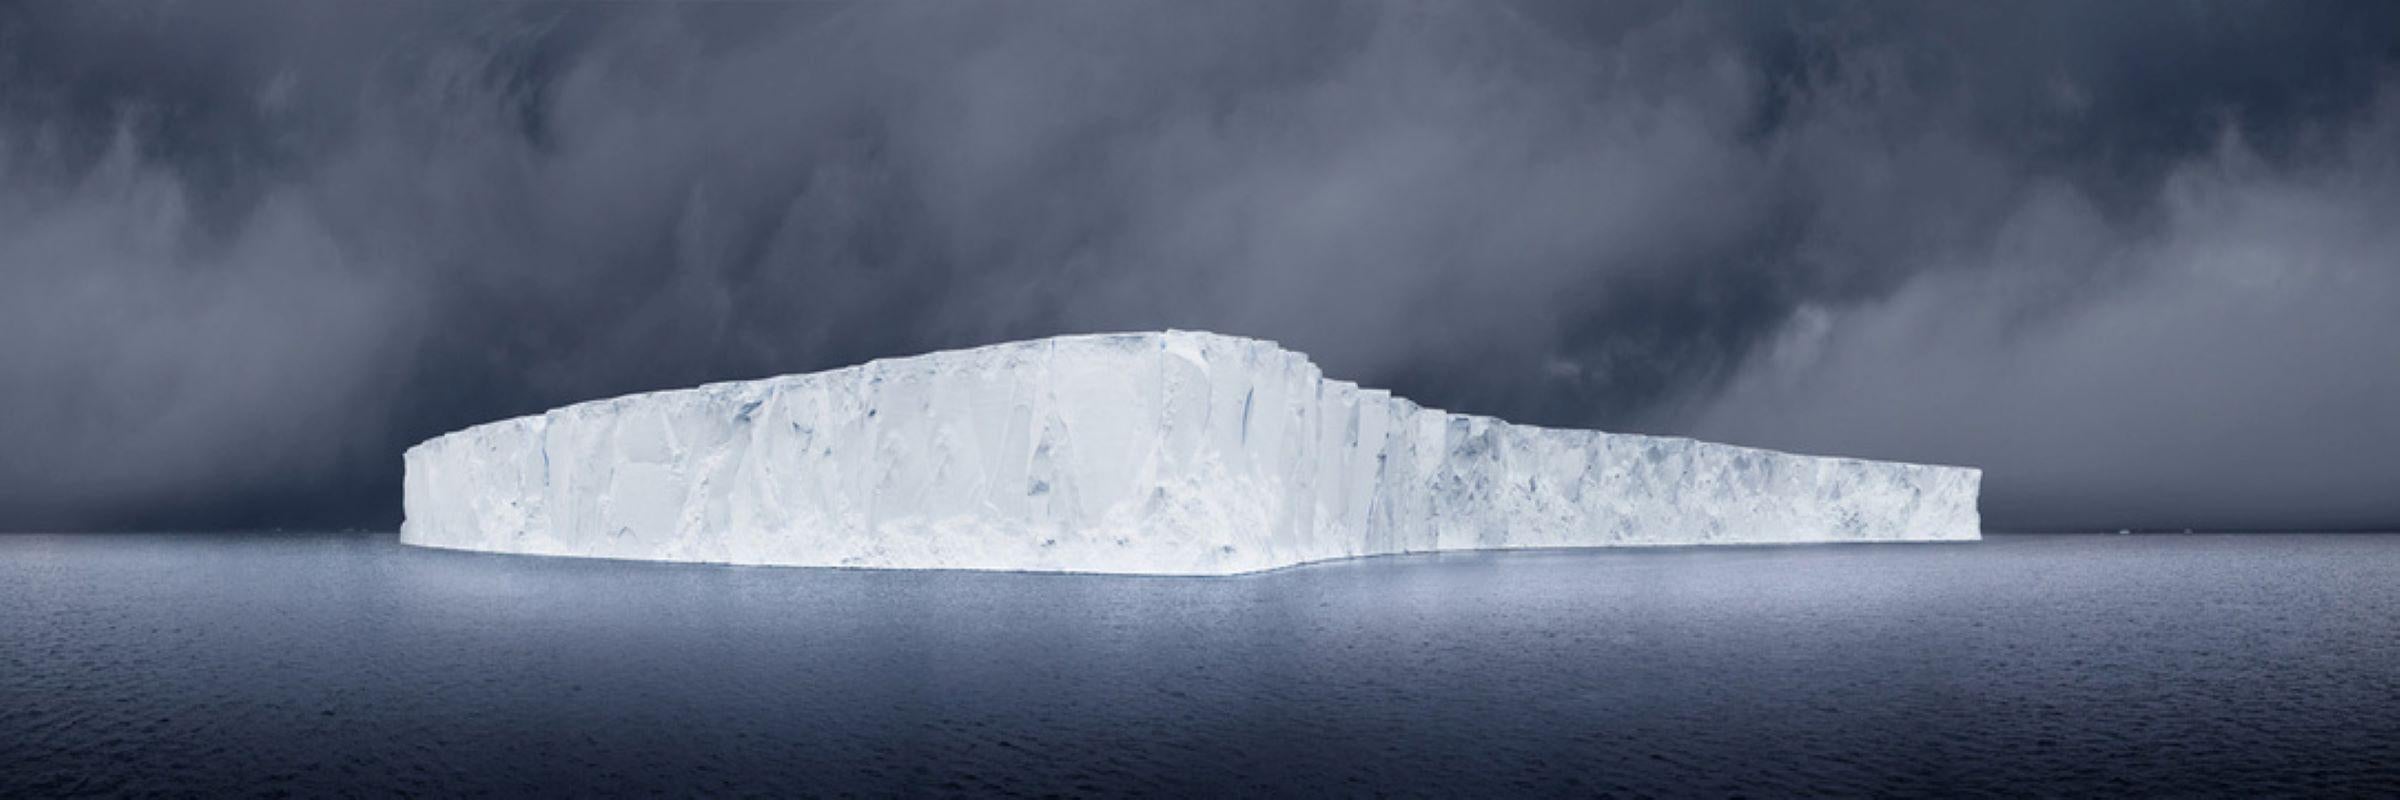 David Burdeny - Blue Monday, Antarctica (14" x 42")